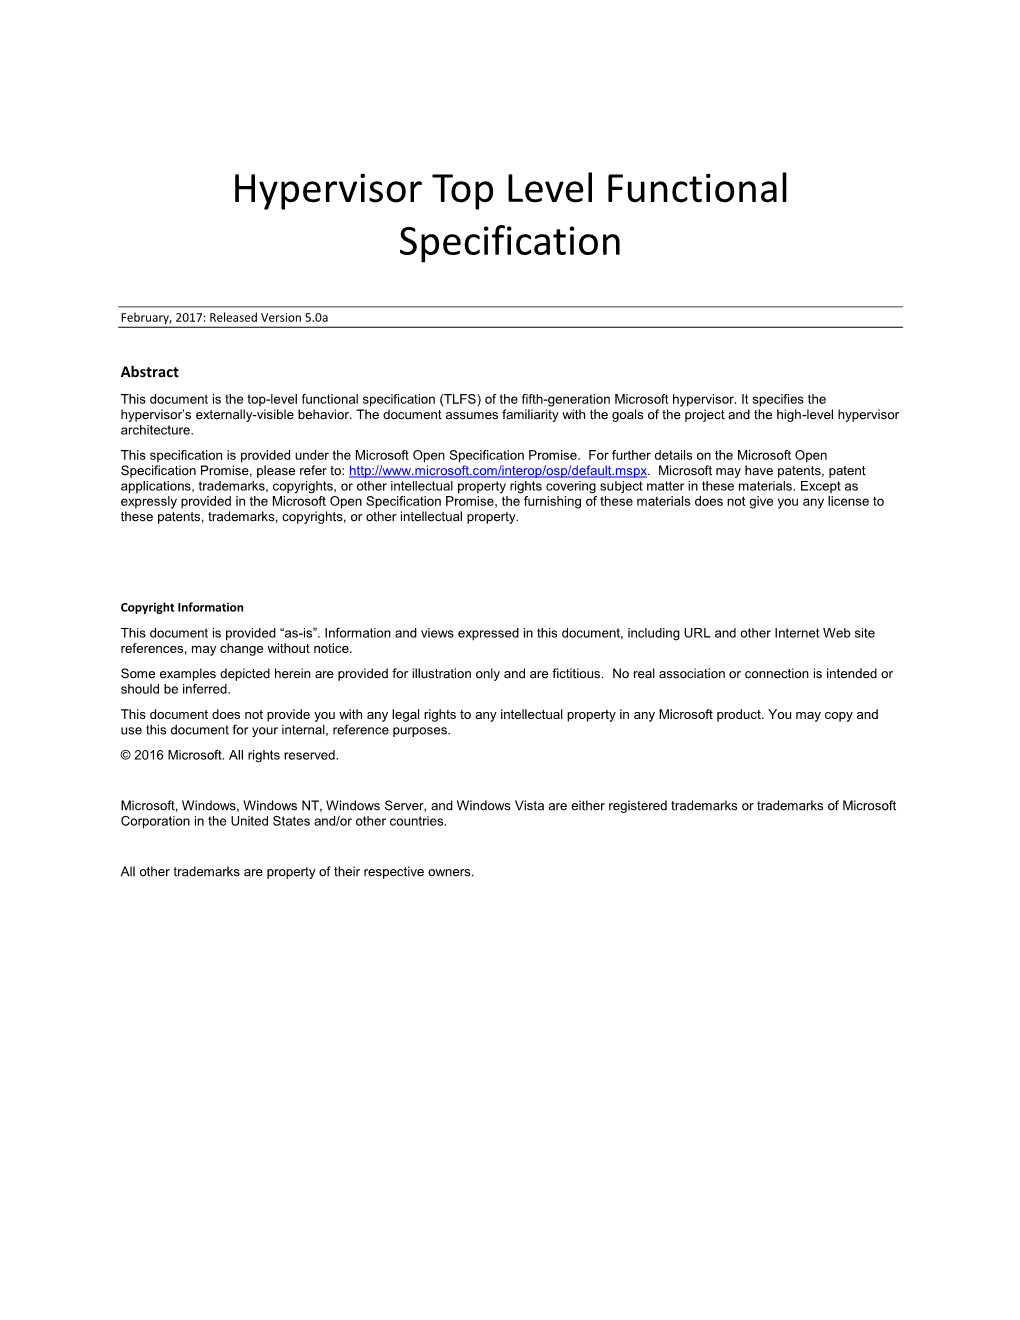 Hypervisor Top Level Functional Specification